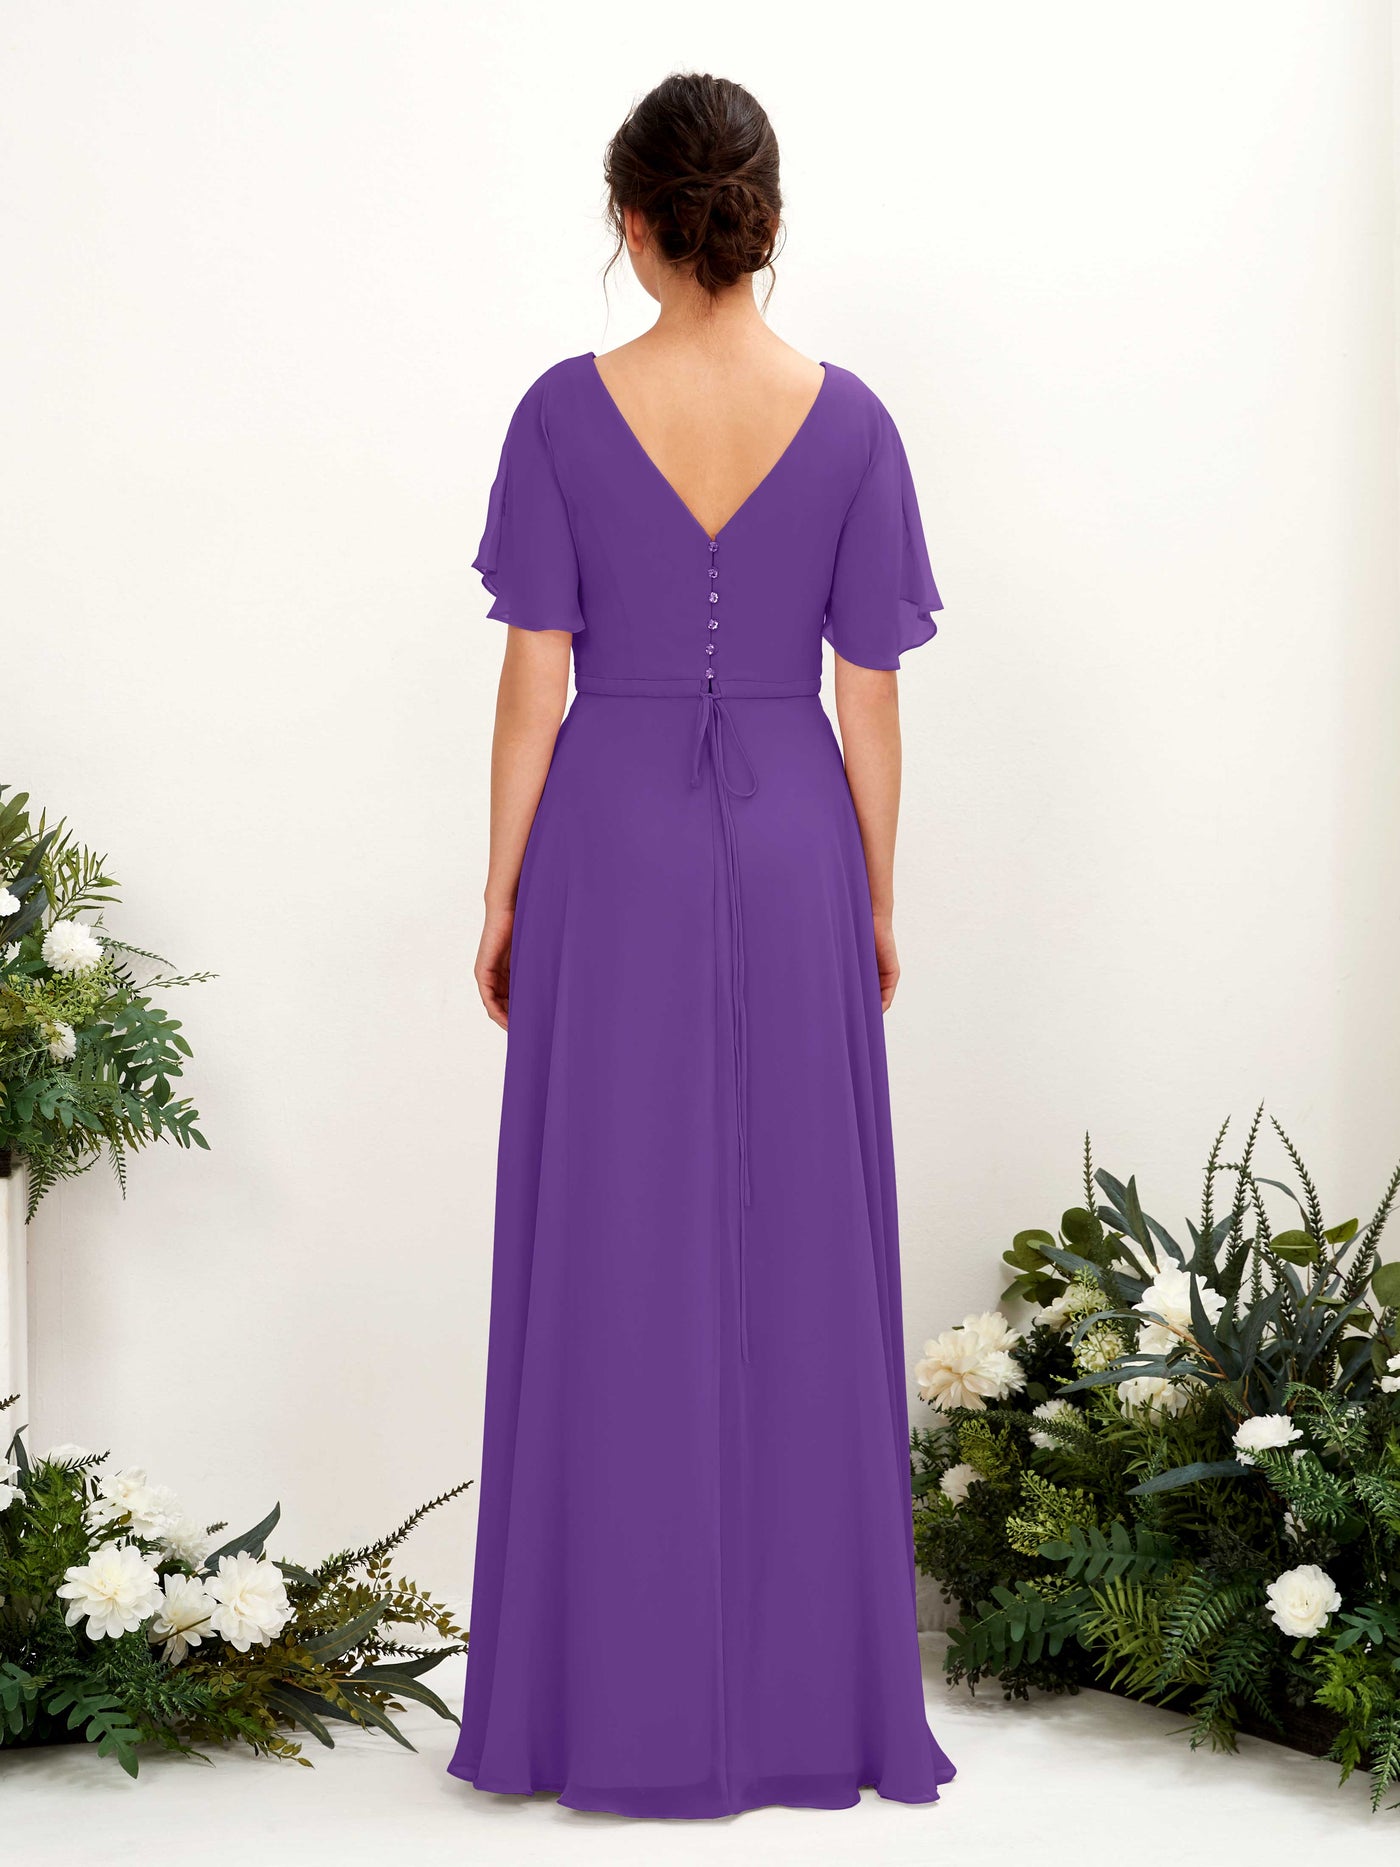 Regency Bridesmaid Dresses Bridesmaid Dress A-line Chiffon V-neck Full Length Short Sleeves Wedding Party Dress (81224628)#color_regency